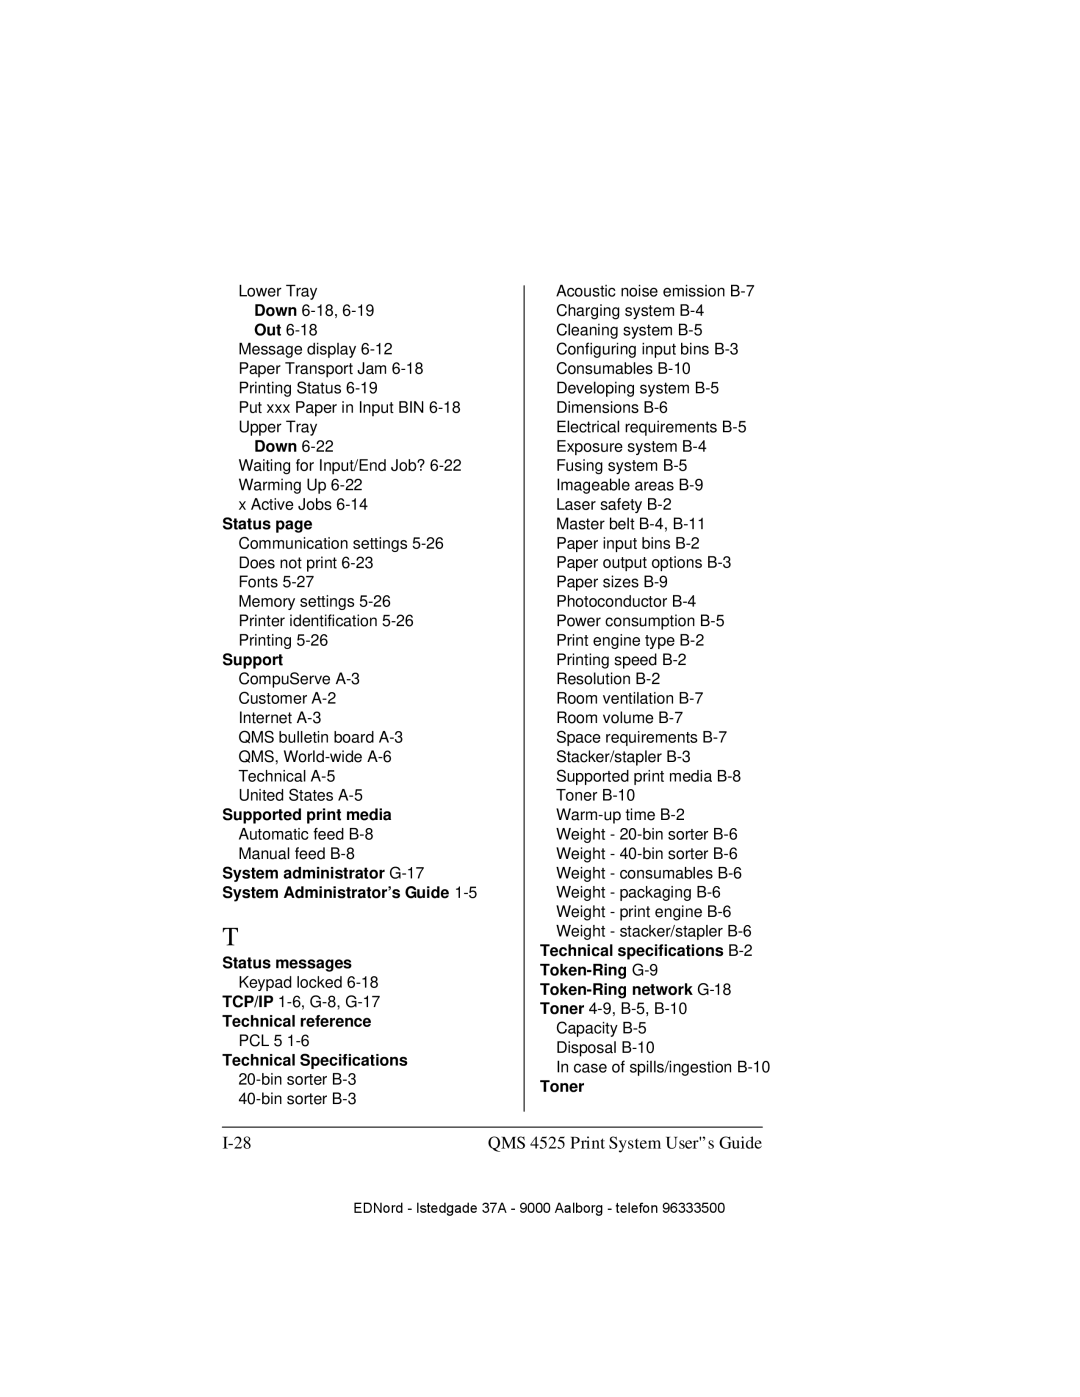 IBM manual I-28, QMS 4525 Print System User’s Guide 